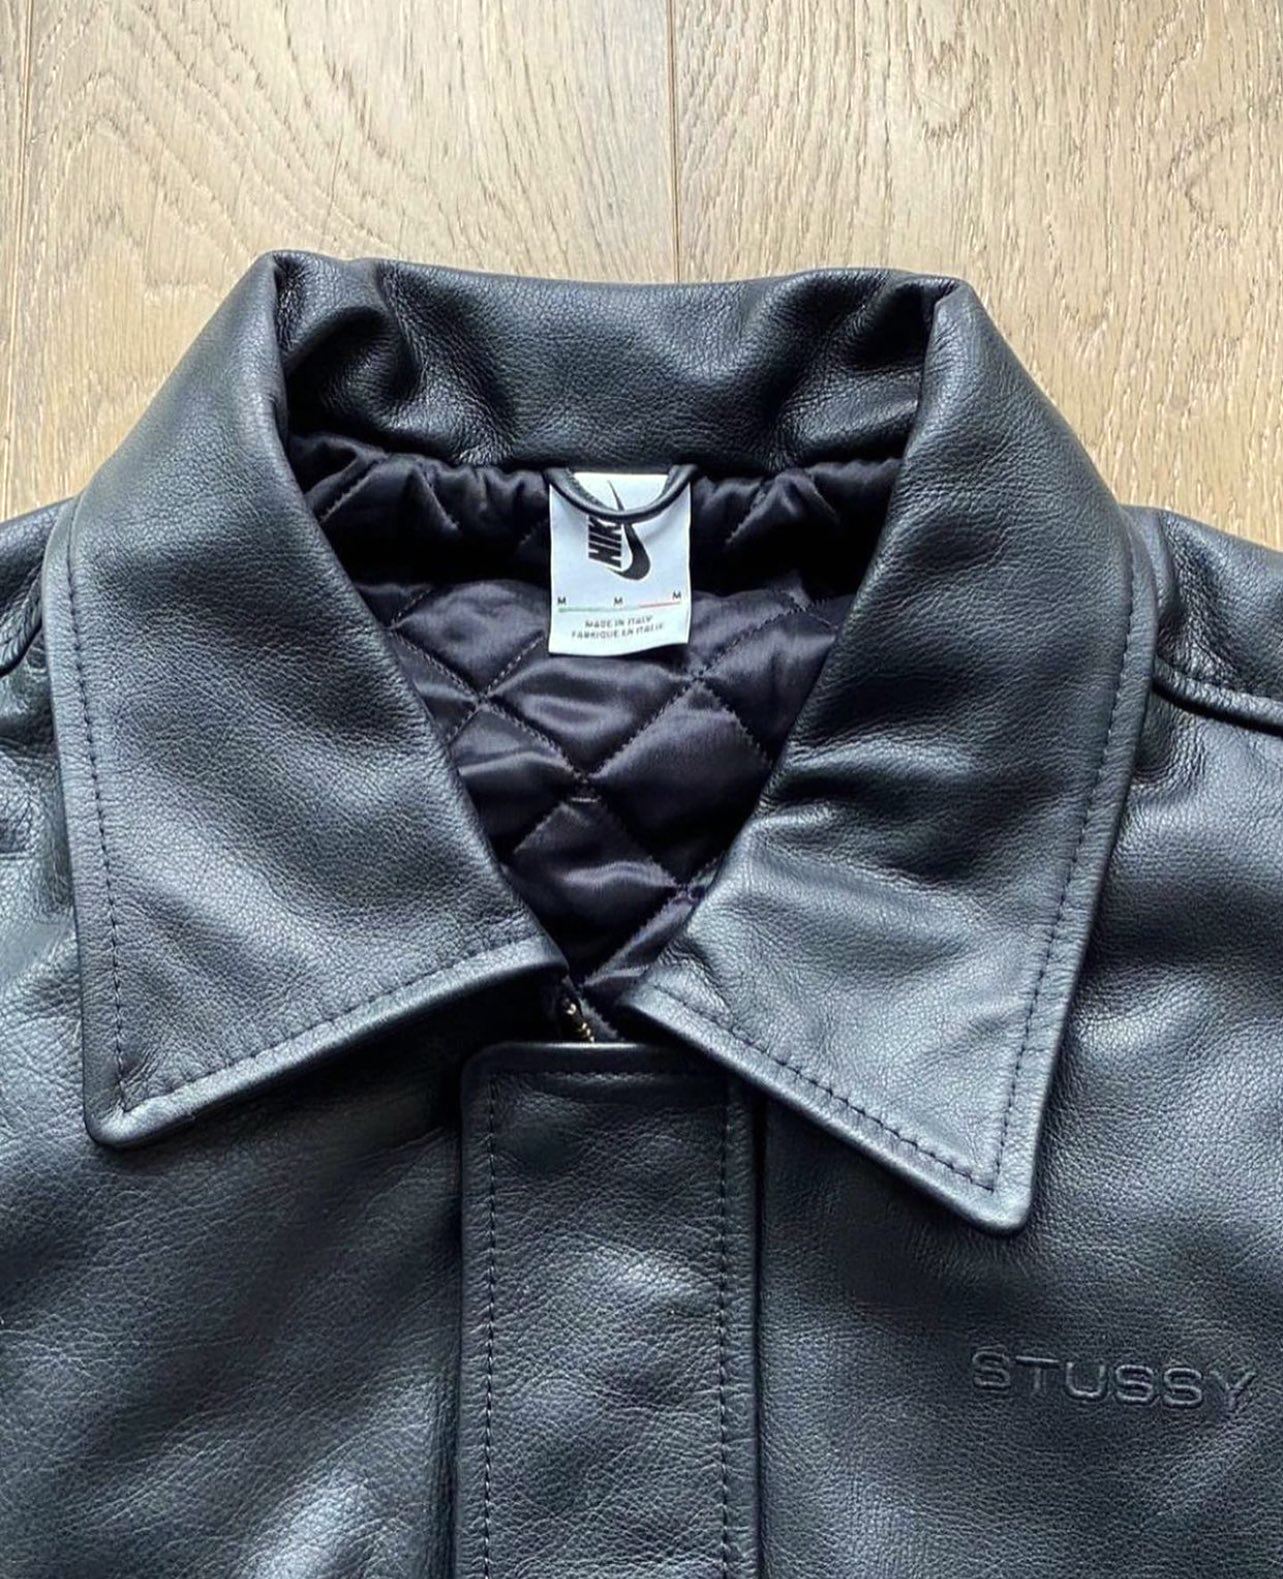 evolución recluta Por Fashion Drops on Twitter: "Stüssy x Nike Leather Jacket (limited to 25  pieces) worn by Jordan Vickors https://t.co/x07ZN3UJ9D" / Twitter